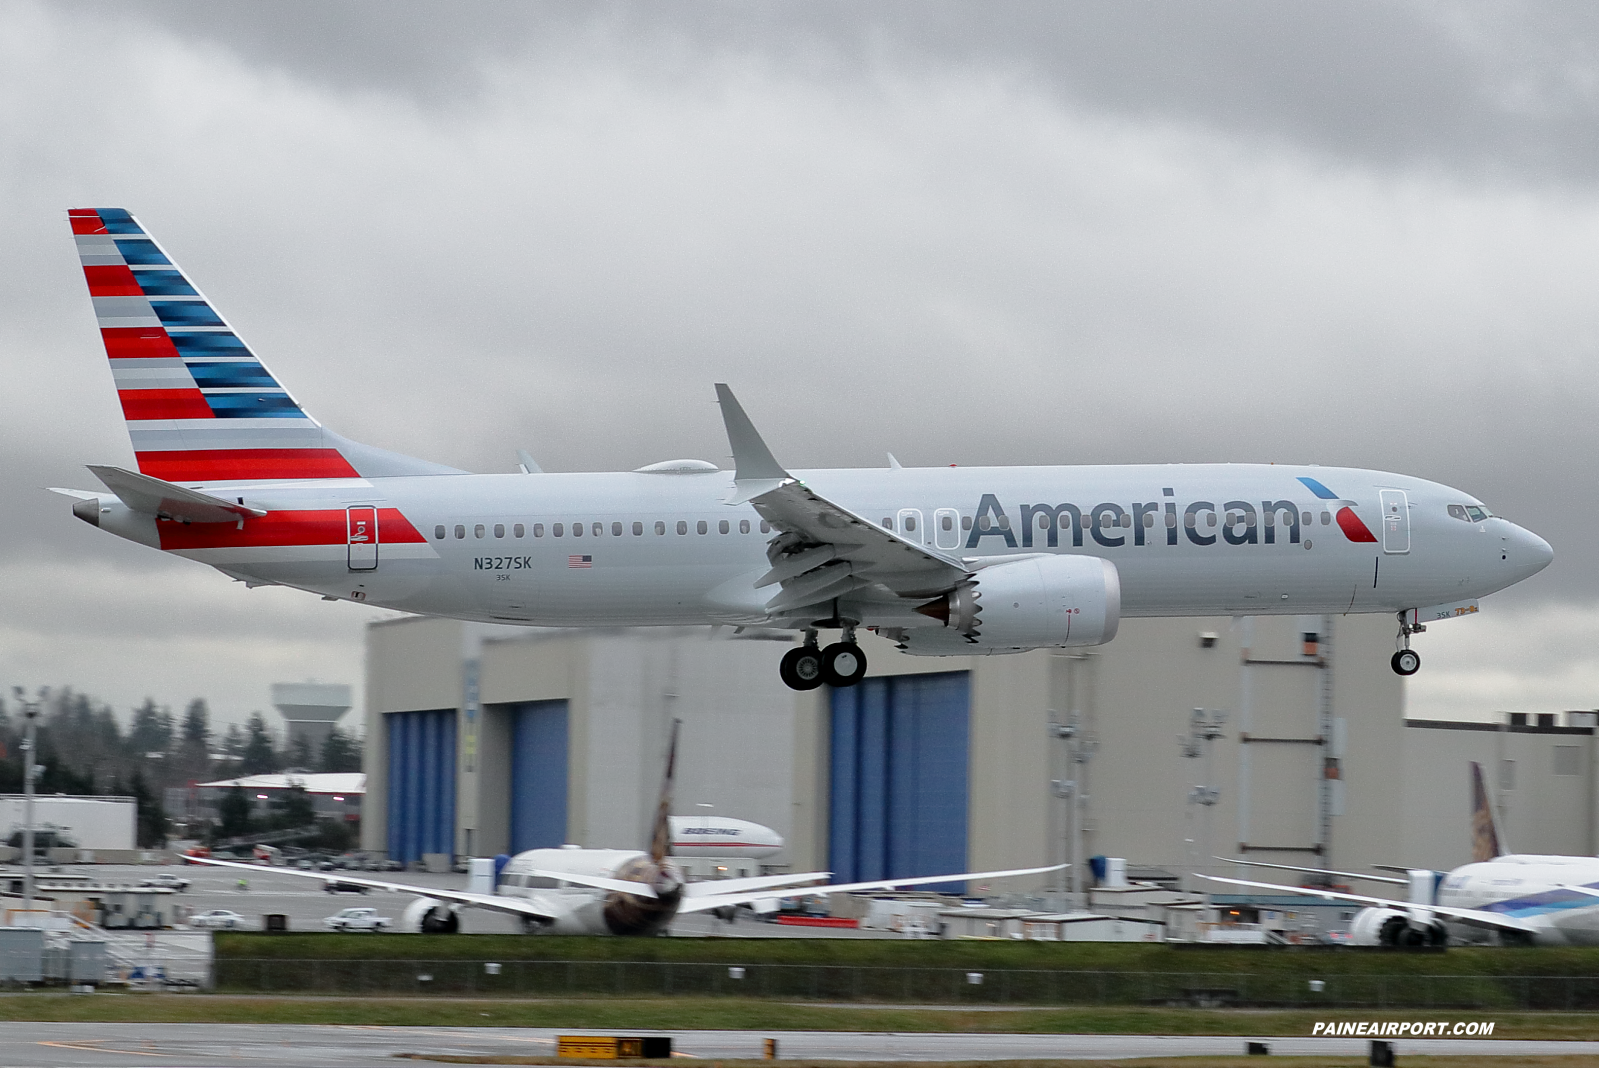 American Airlines 737 N327SK at KPAE Paine Field